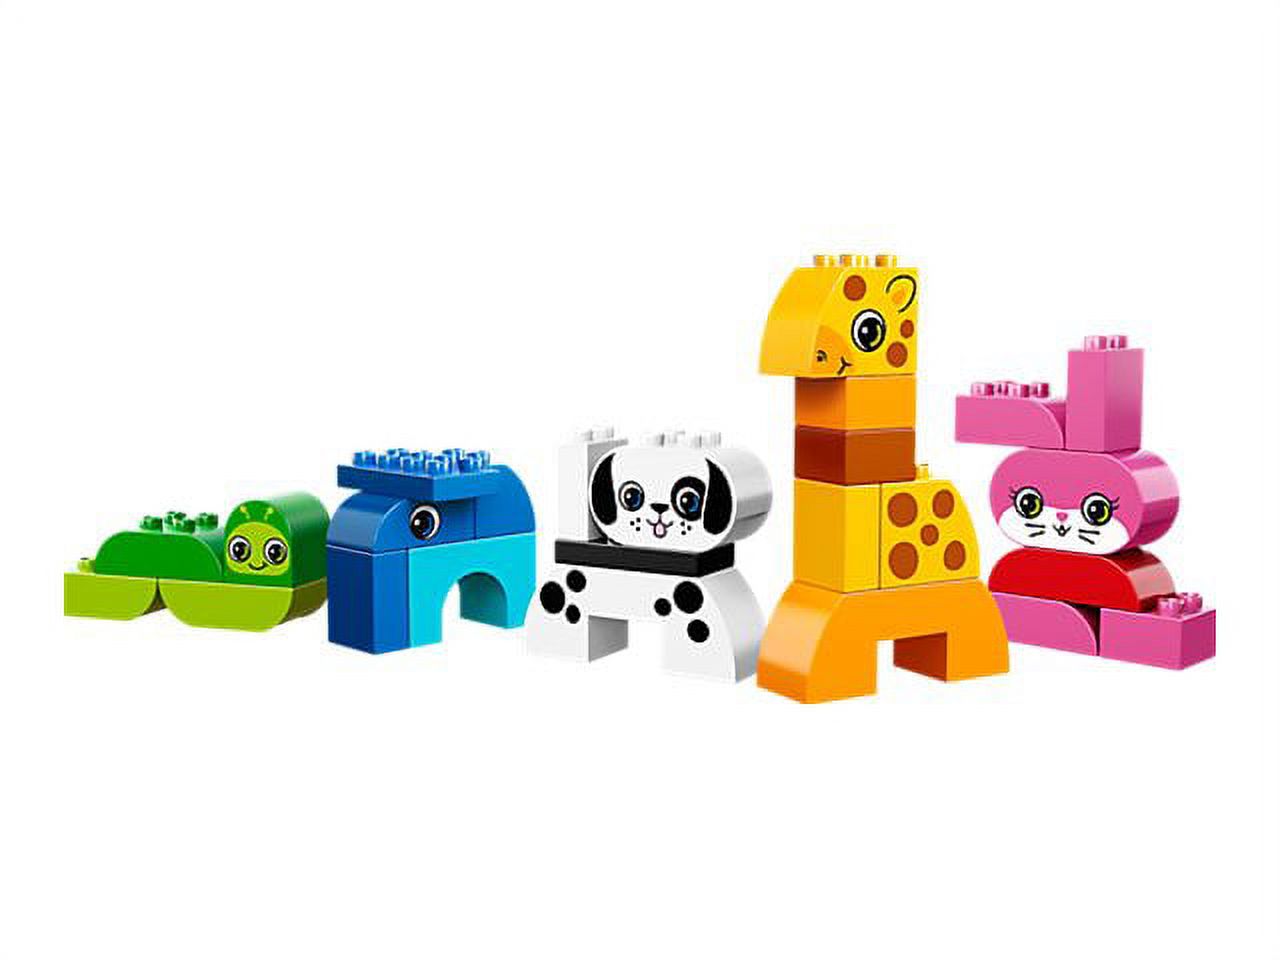 LEGO DUPLO 10573 - Creative Animals - image 1 of 5